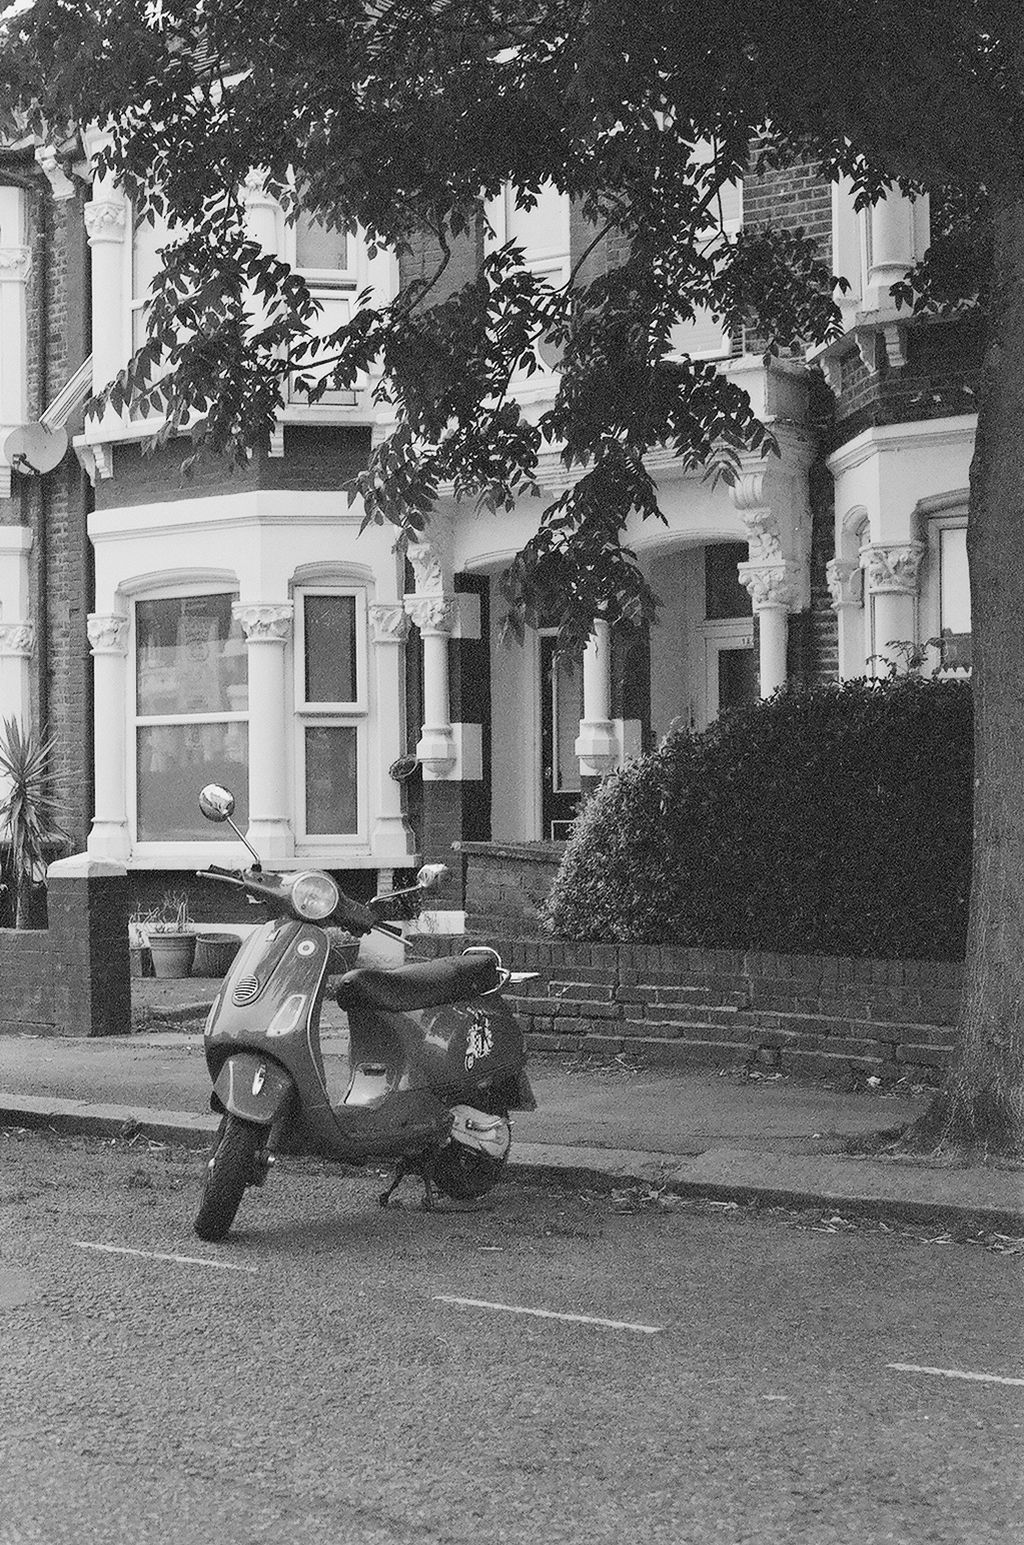 Moped under tree, London (Ilford FP4)